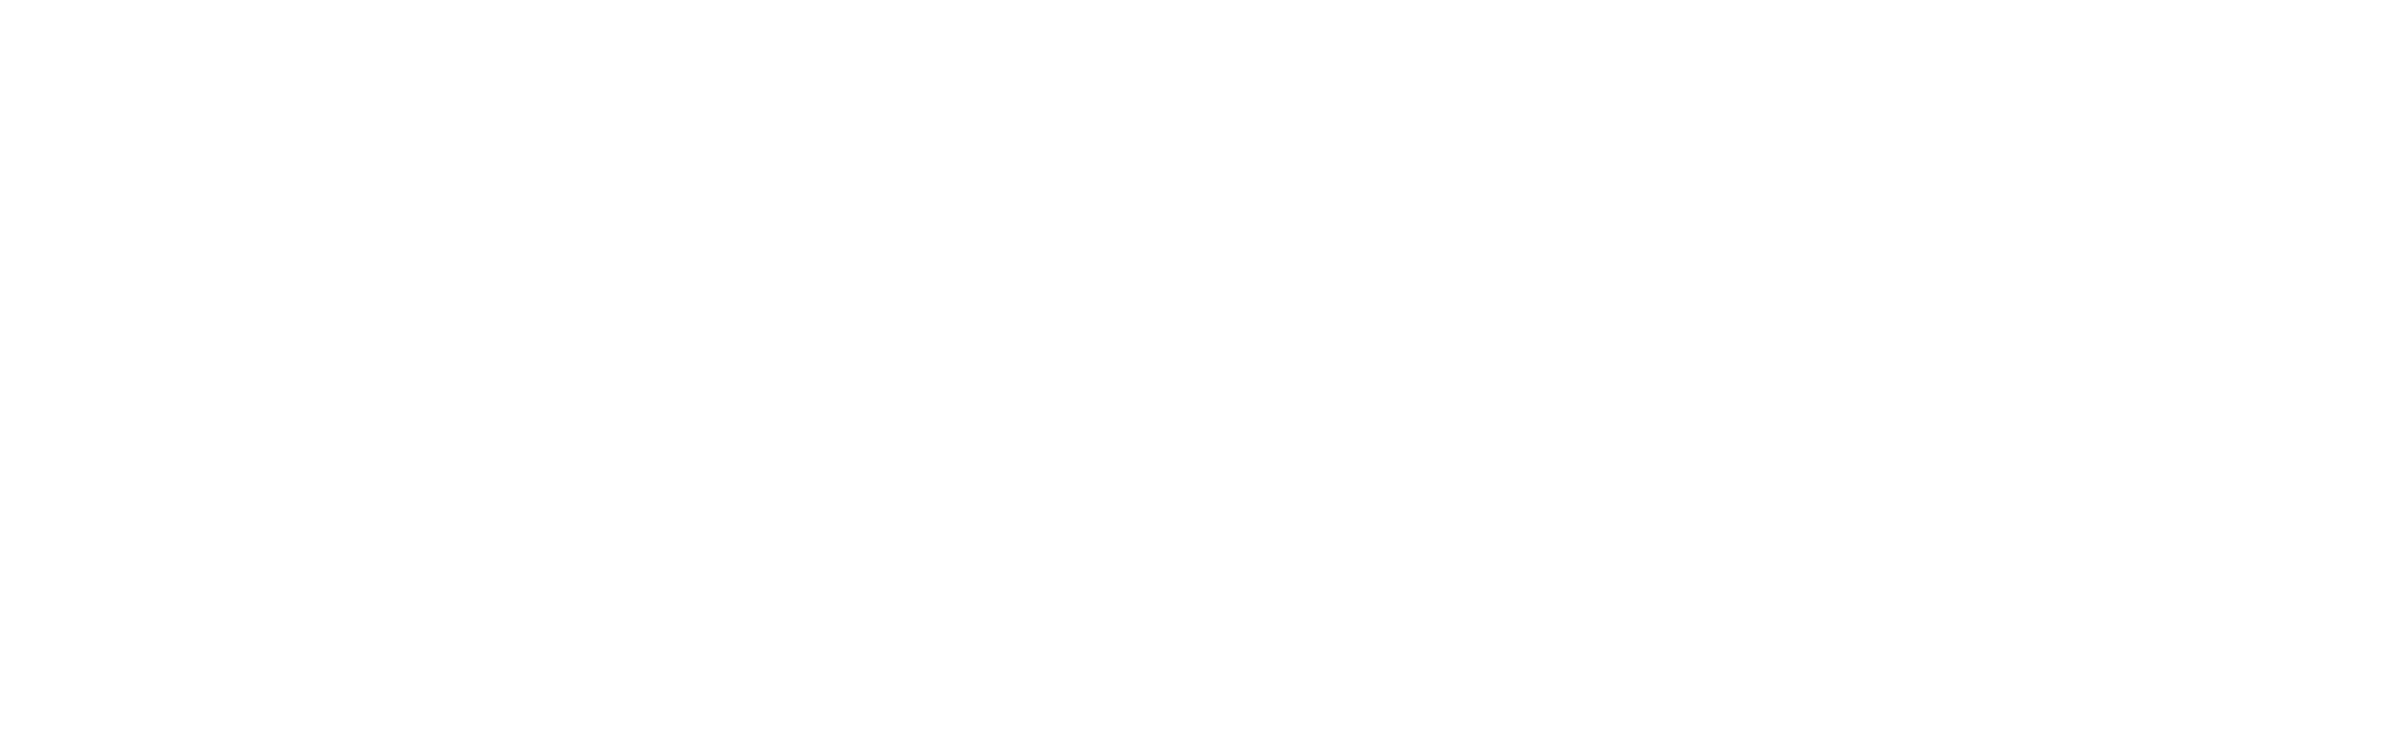 Mike-Kim-New-Logo-Horizontal copy.png